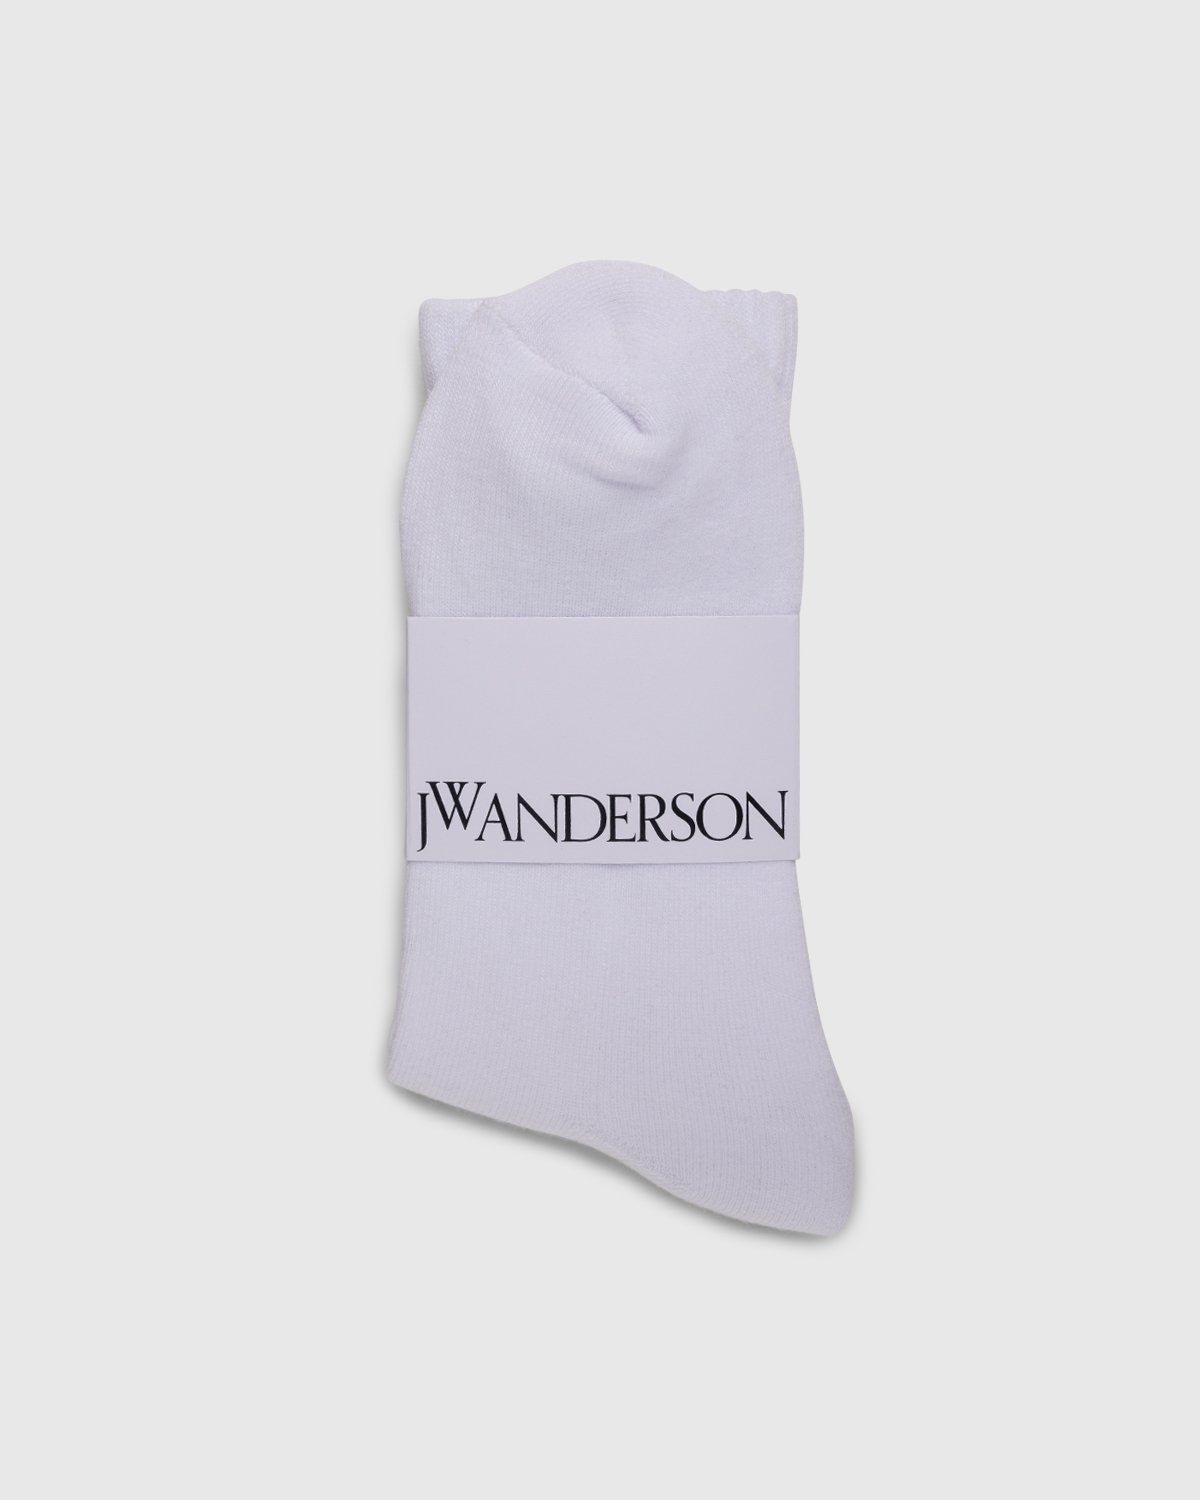 J.W. Anderson – JWA Logo Short Ankle Socks White/Black - Crew - White - Image 2